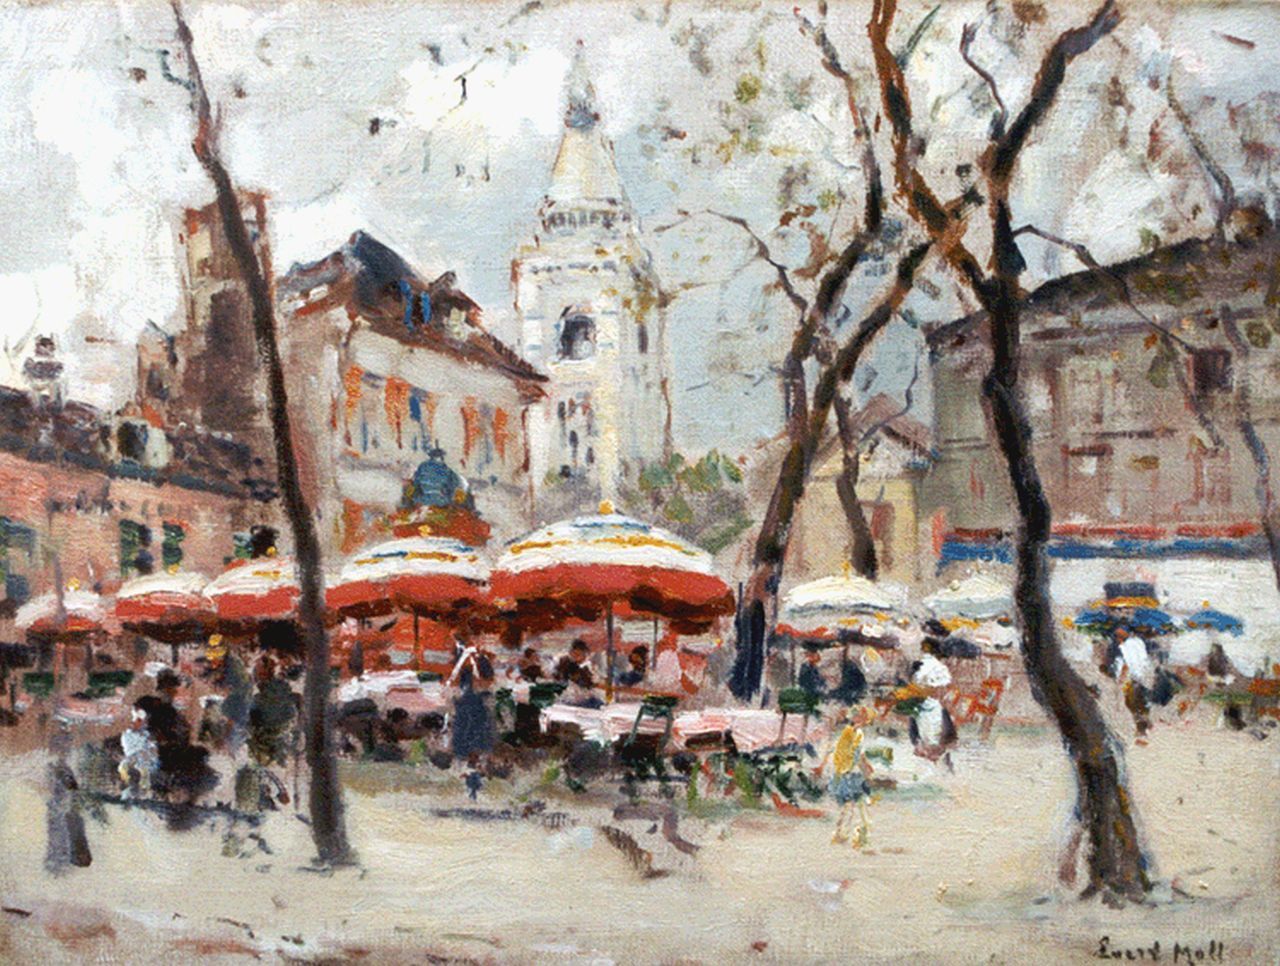 Moll E.  | Evert Moll, View of the Montmartre, Paris, oil on canvas 30.5 x 40.0 cm, signed l.r.